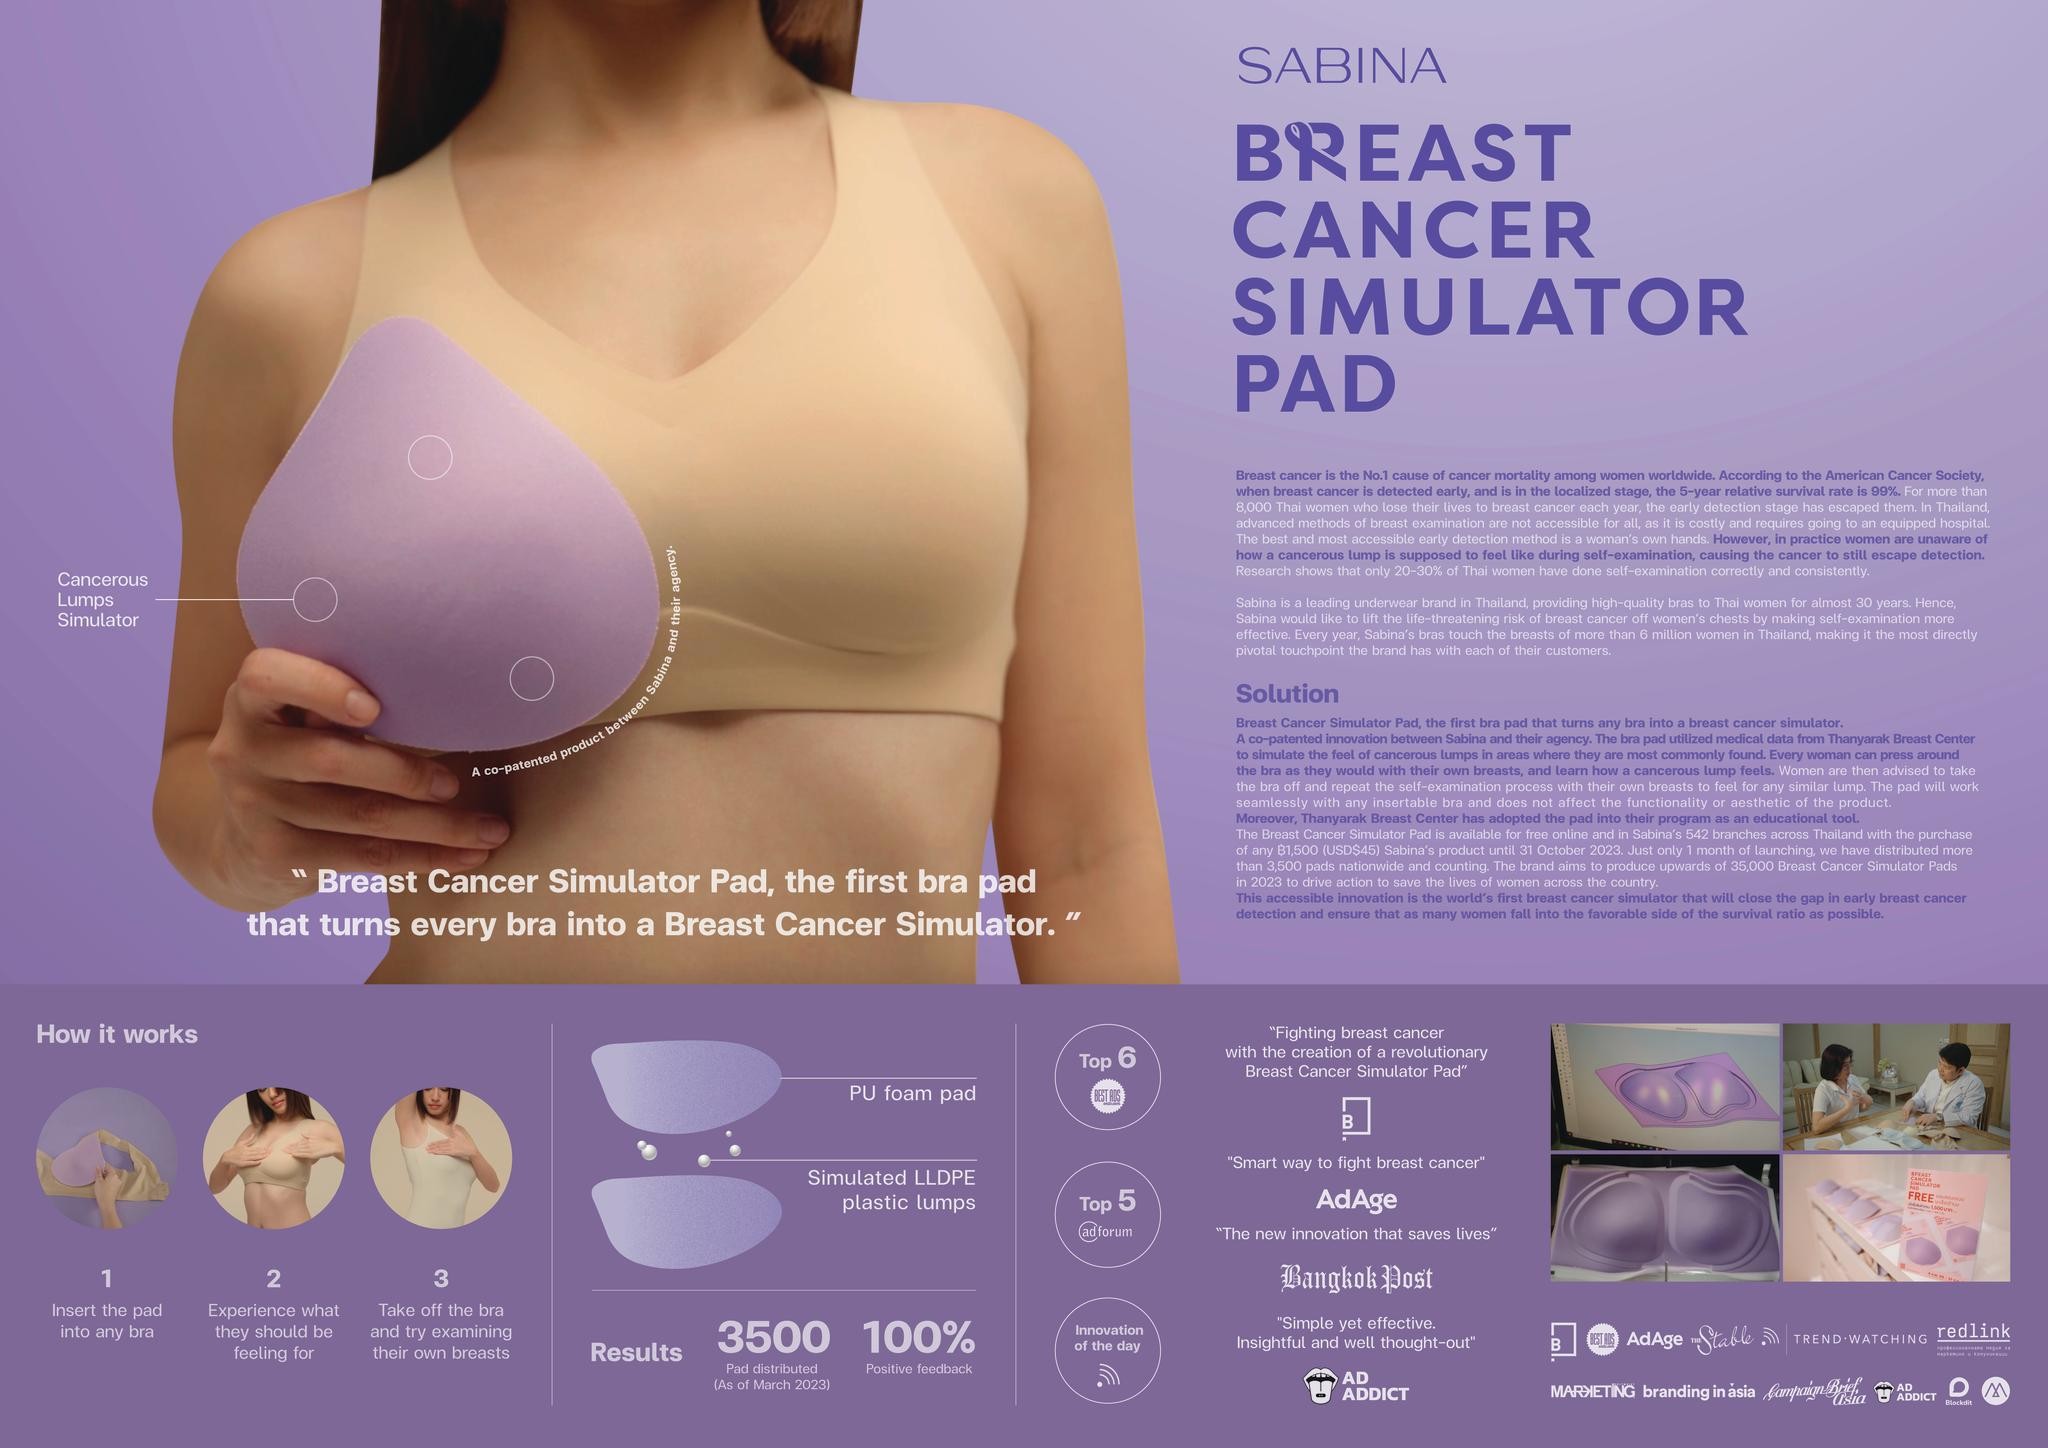 Breast Cancer Simmulator Pad